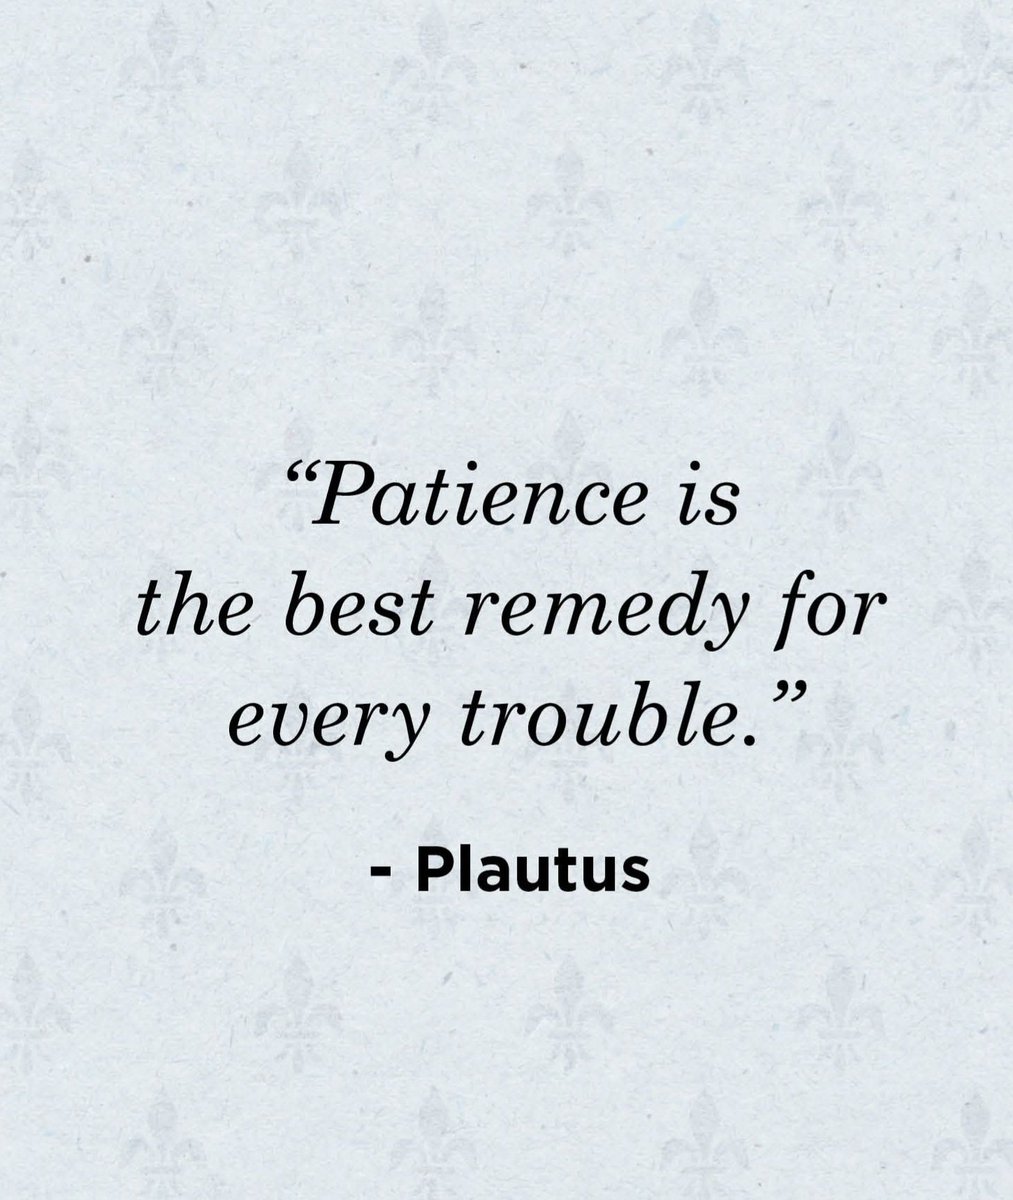 Patience !
#LiteraturePosts 
#quotesaboutlife